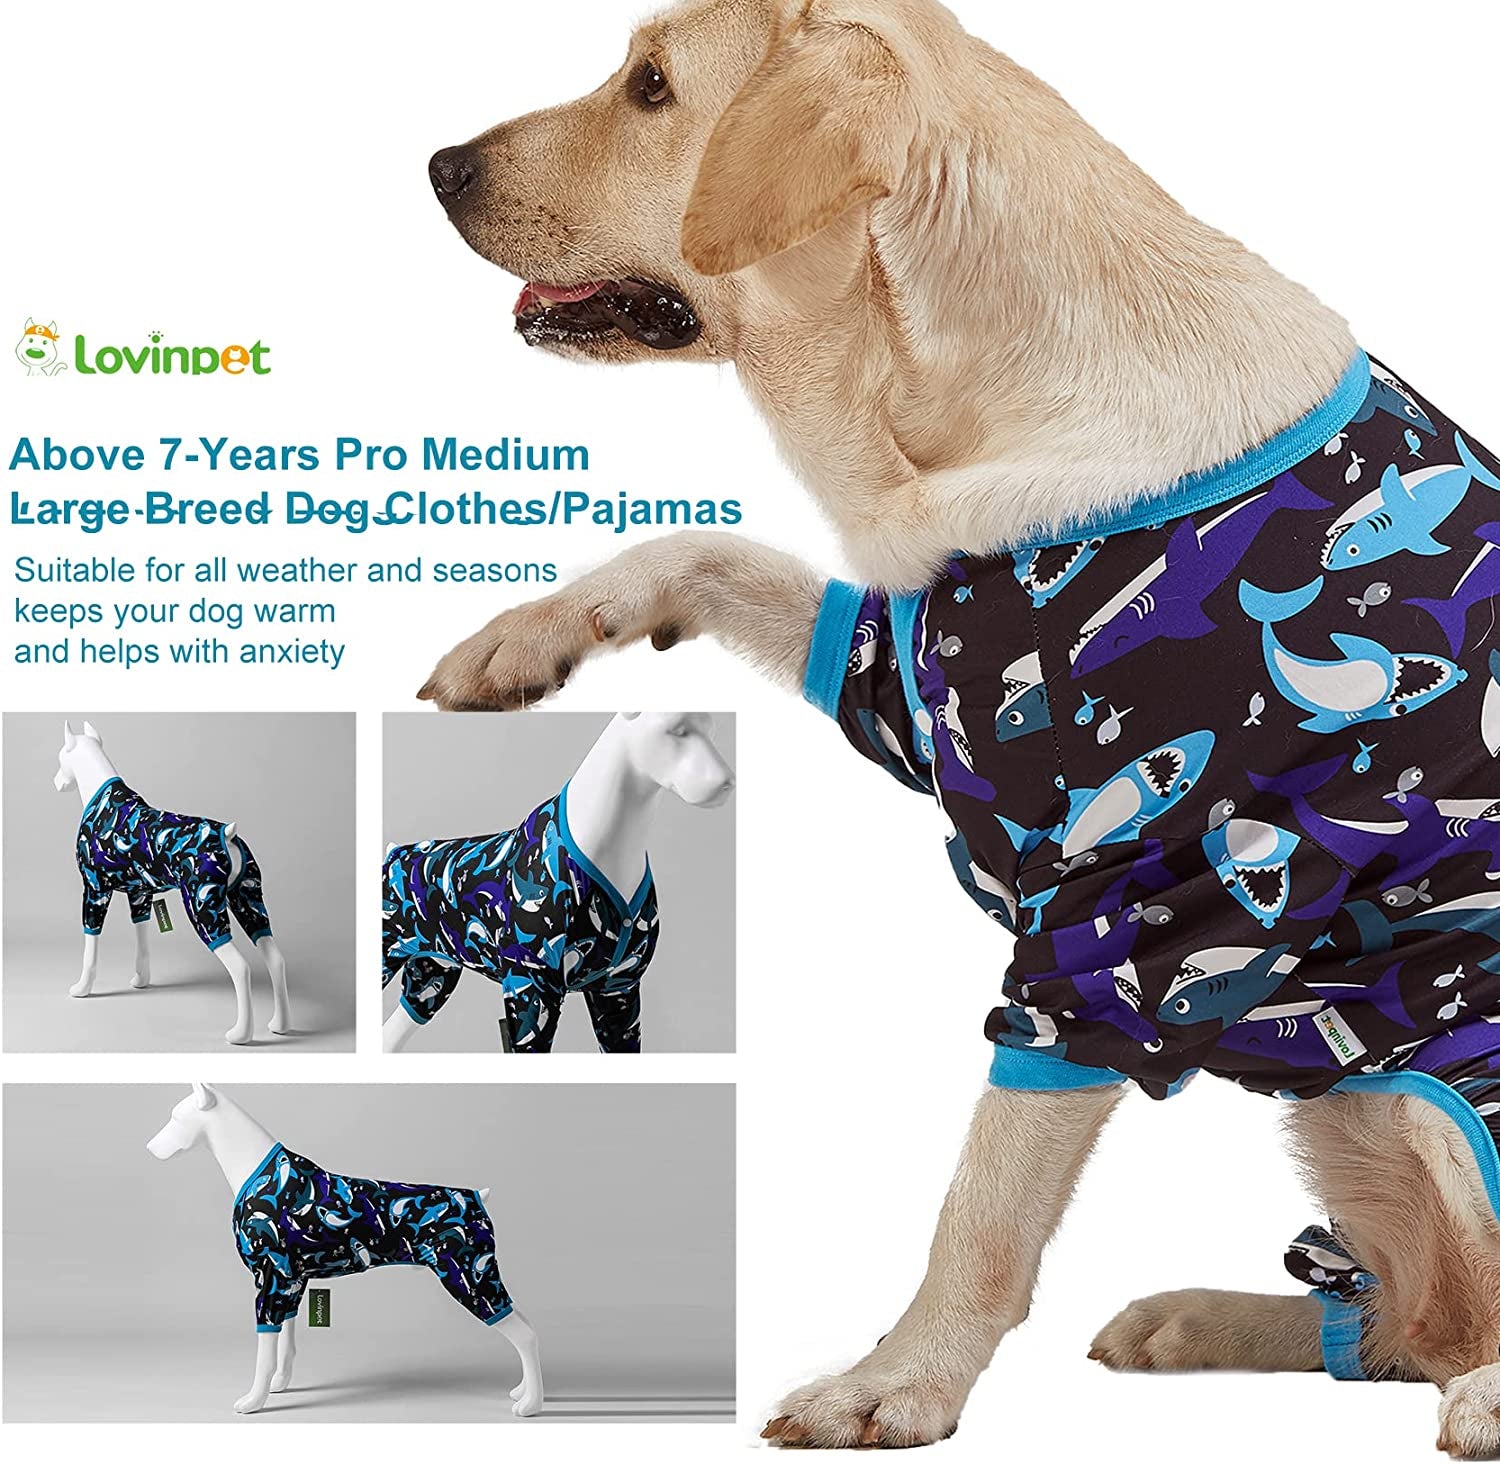  LovinPet Dogs Hoodiess Large, Lightweight & Warm